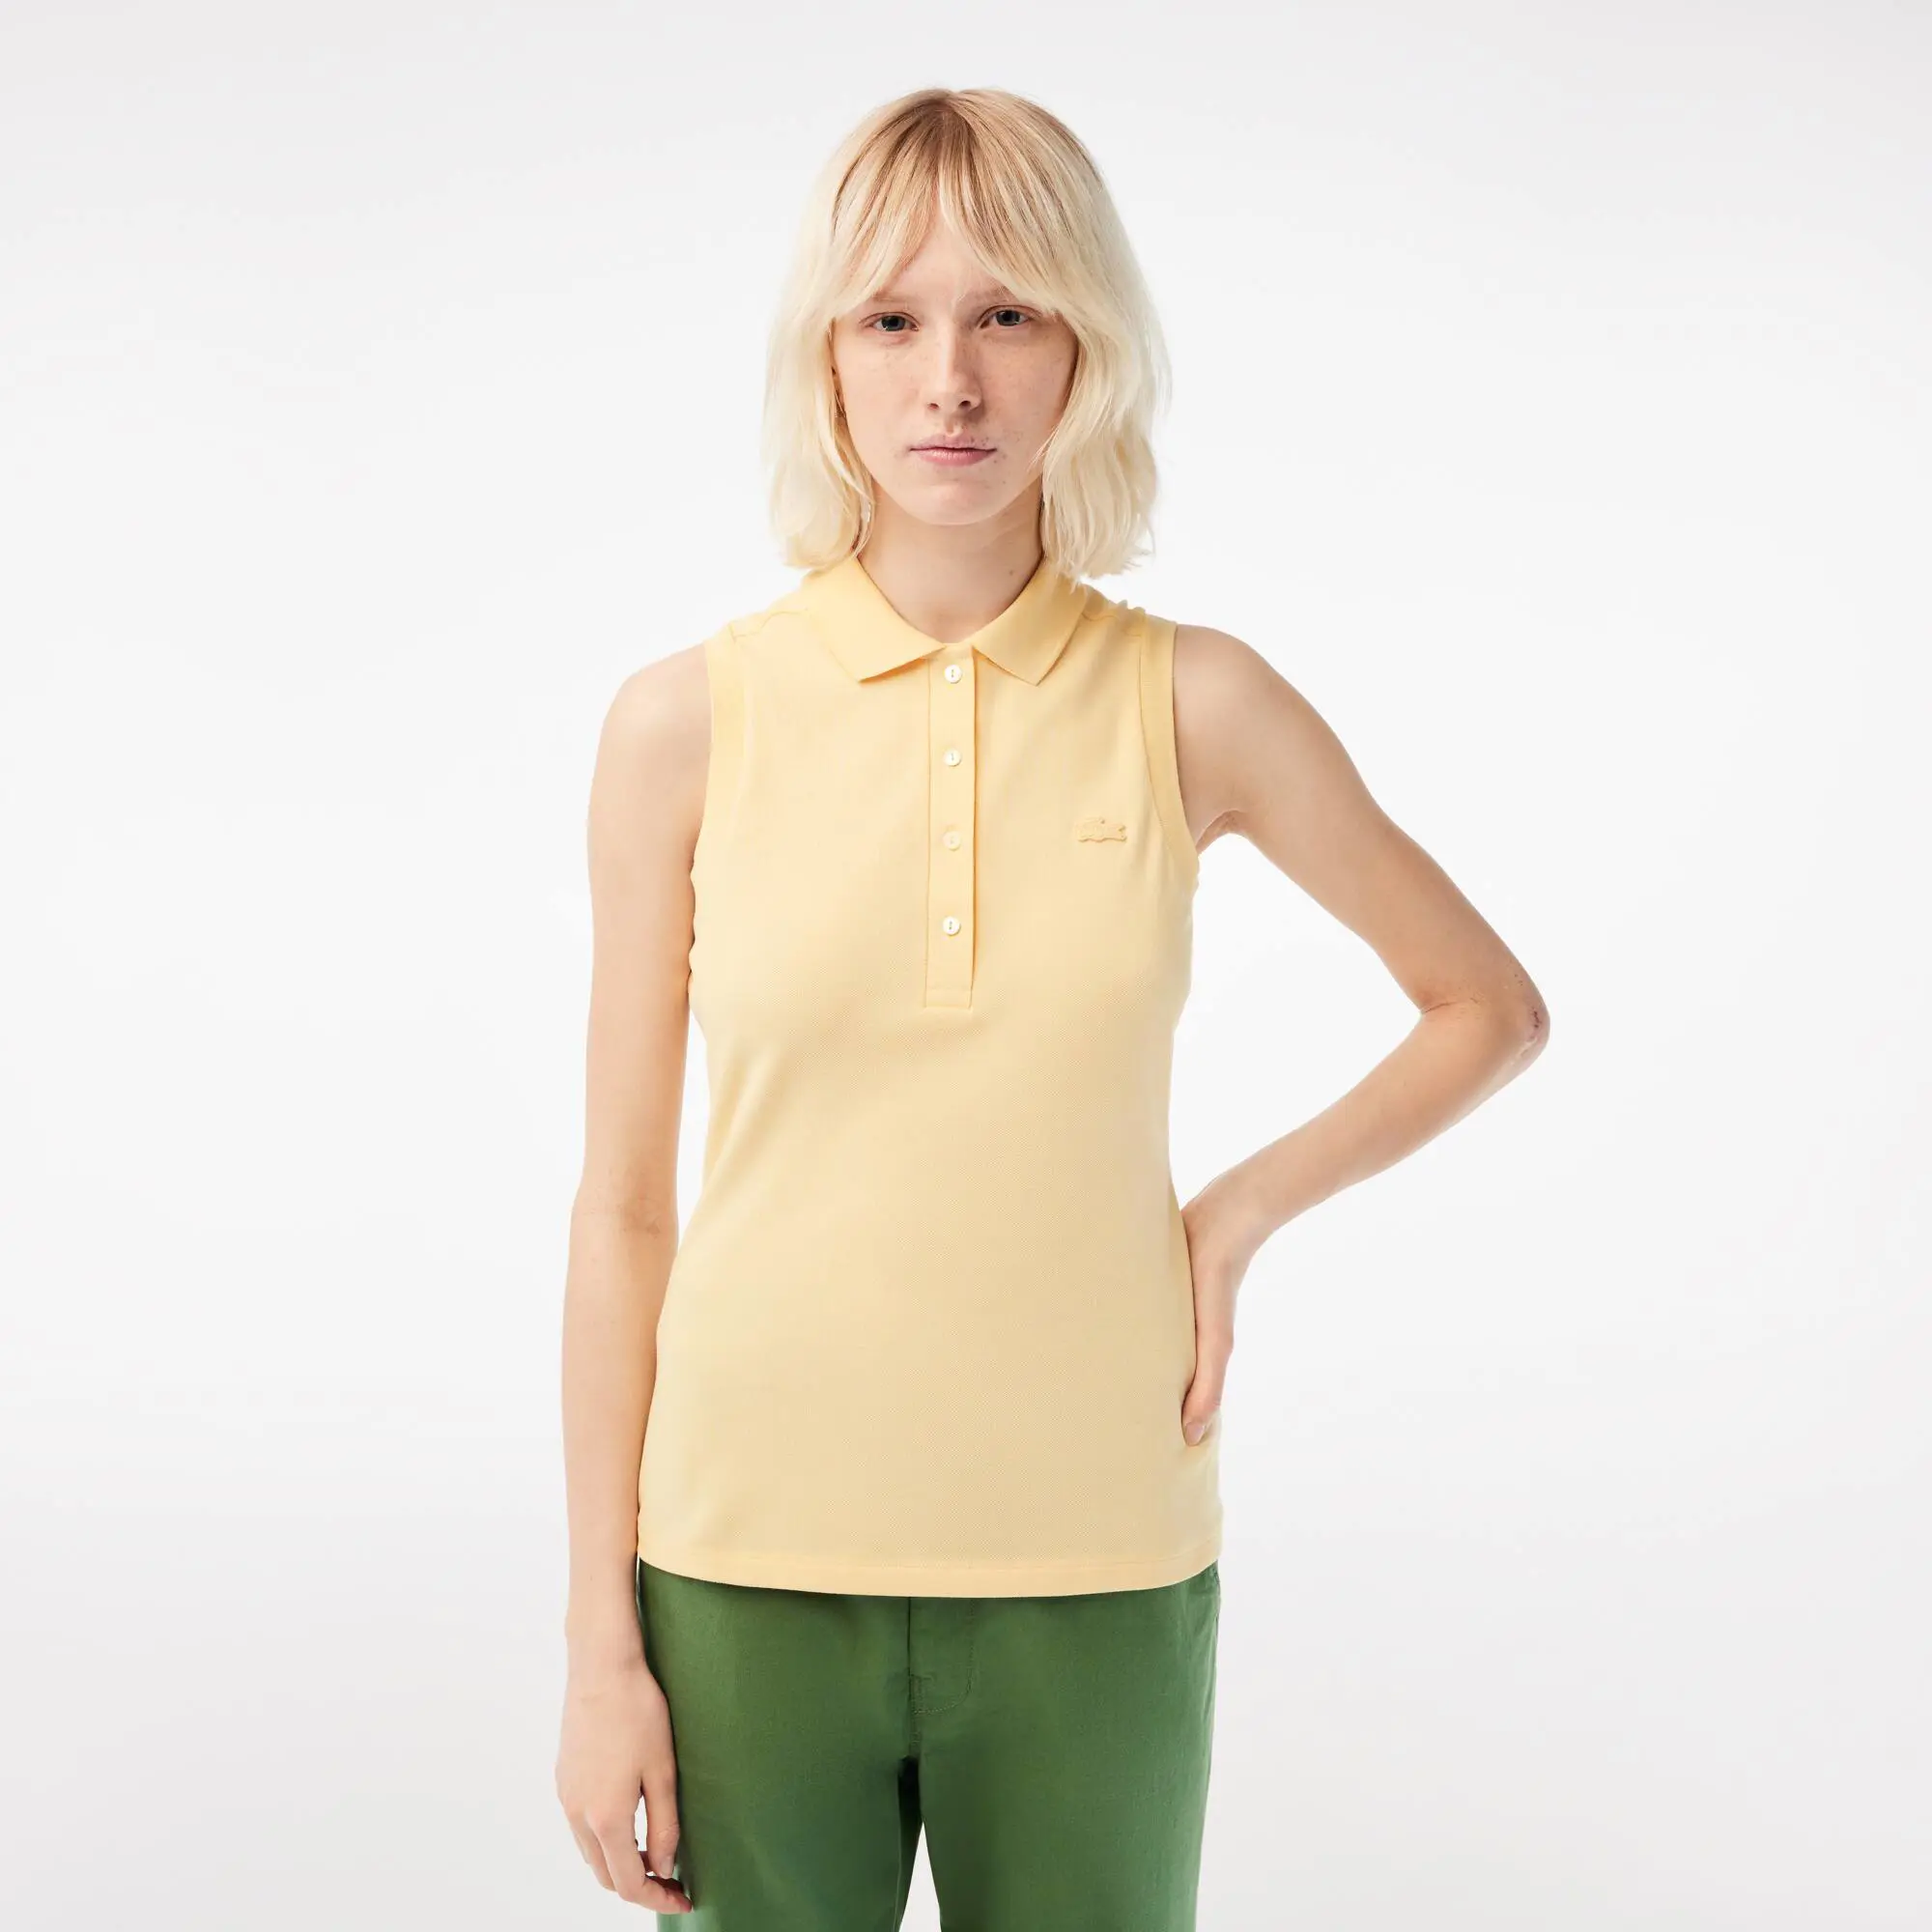 Lacoste Women's Slim Fit Cotton Piqué Sleeveless Polo. 1